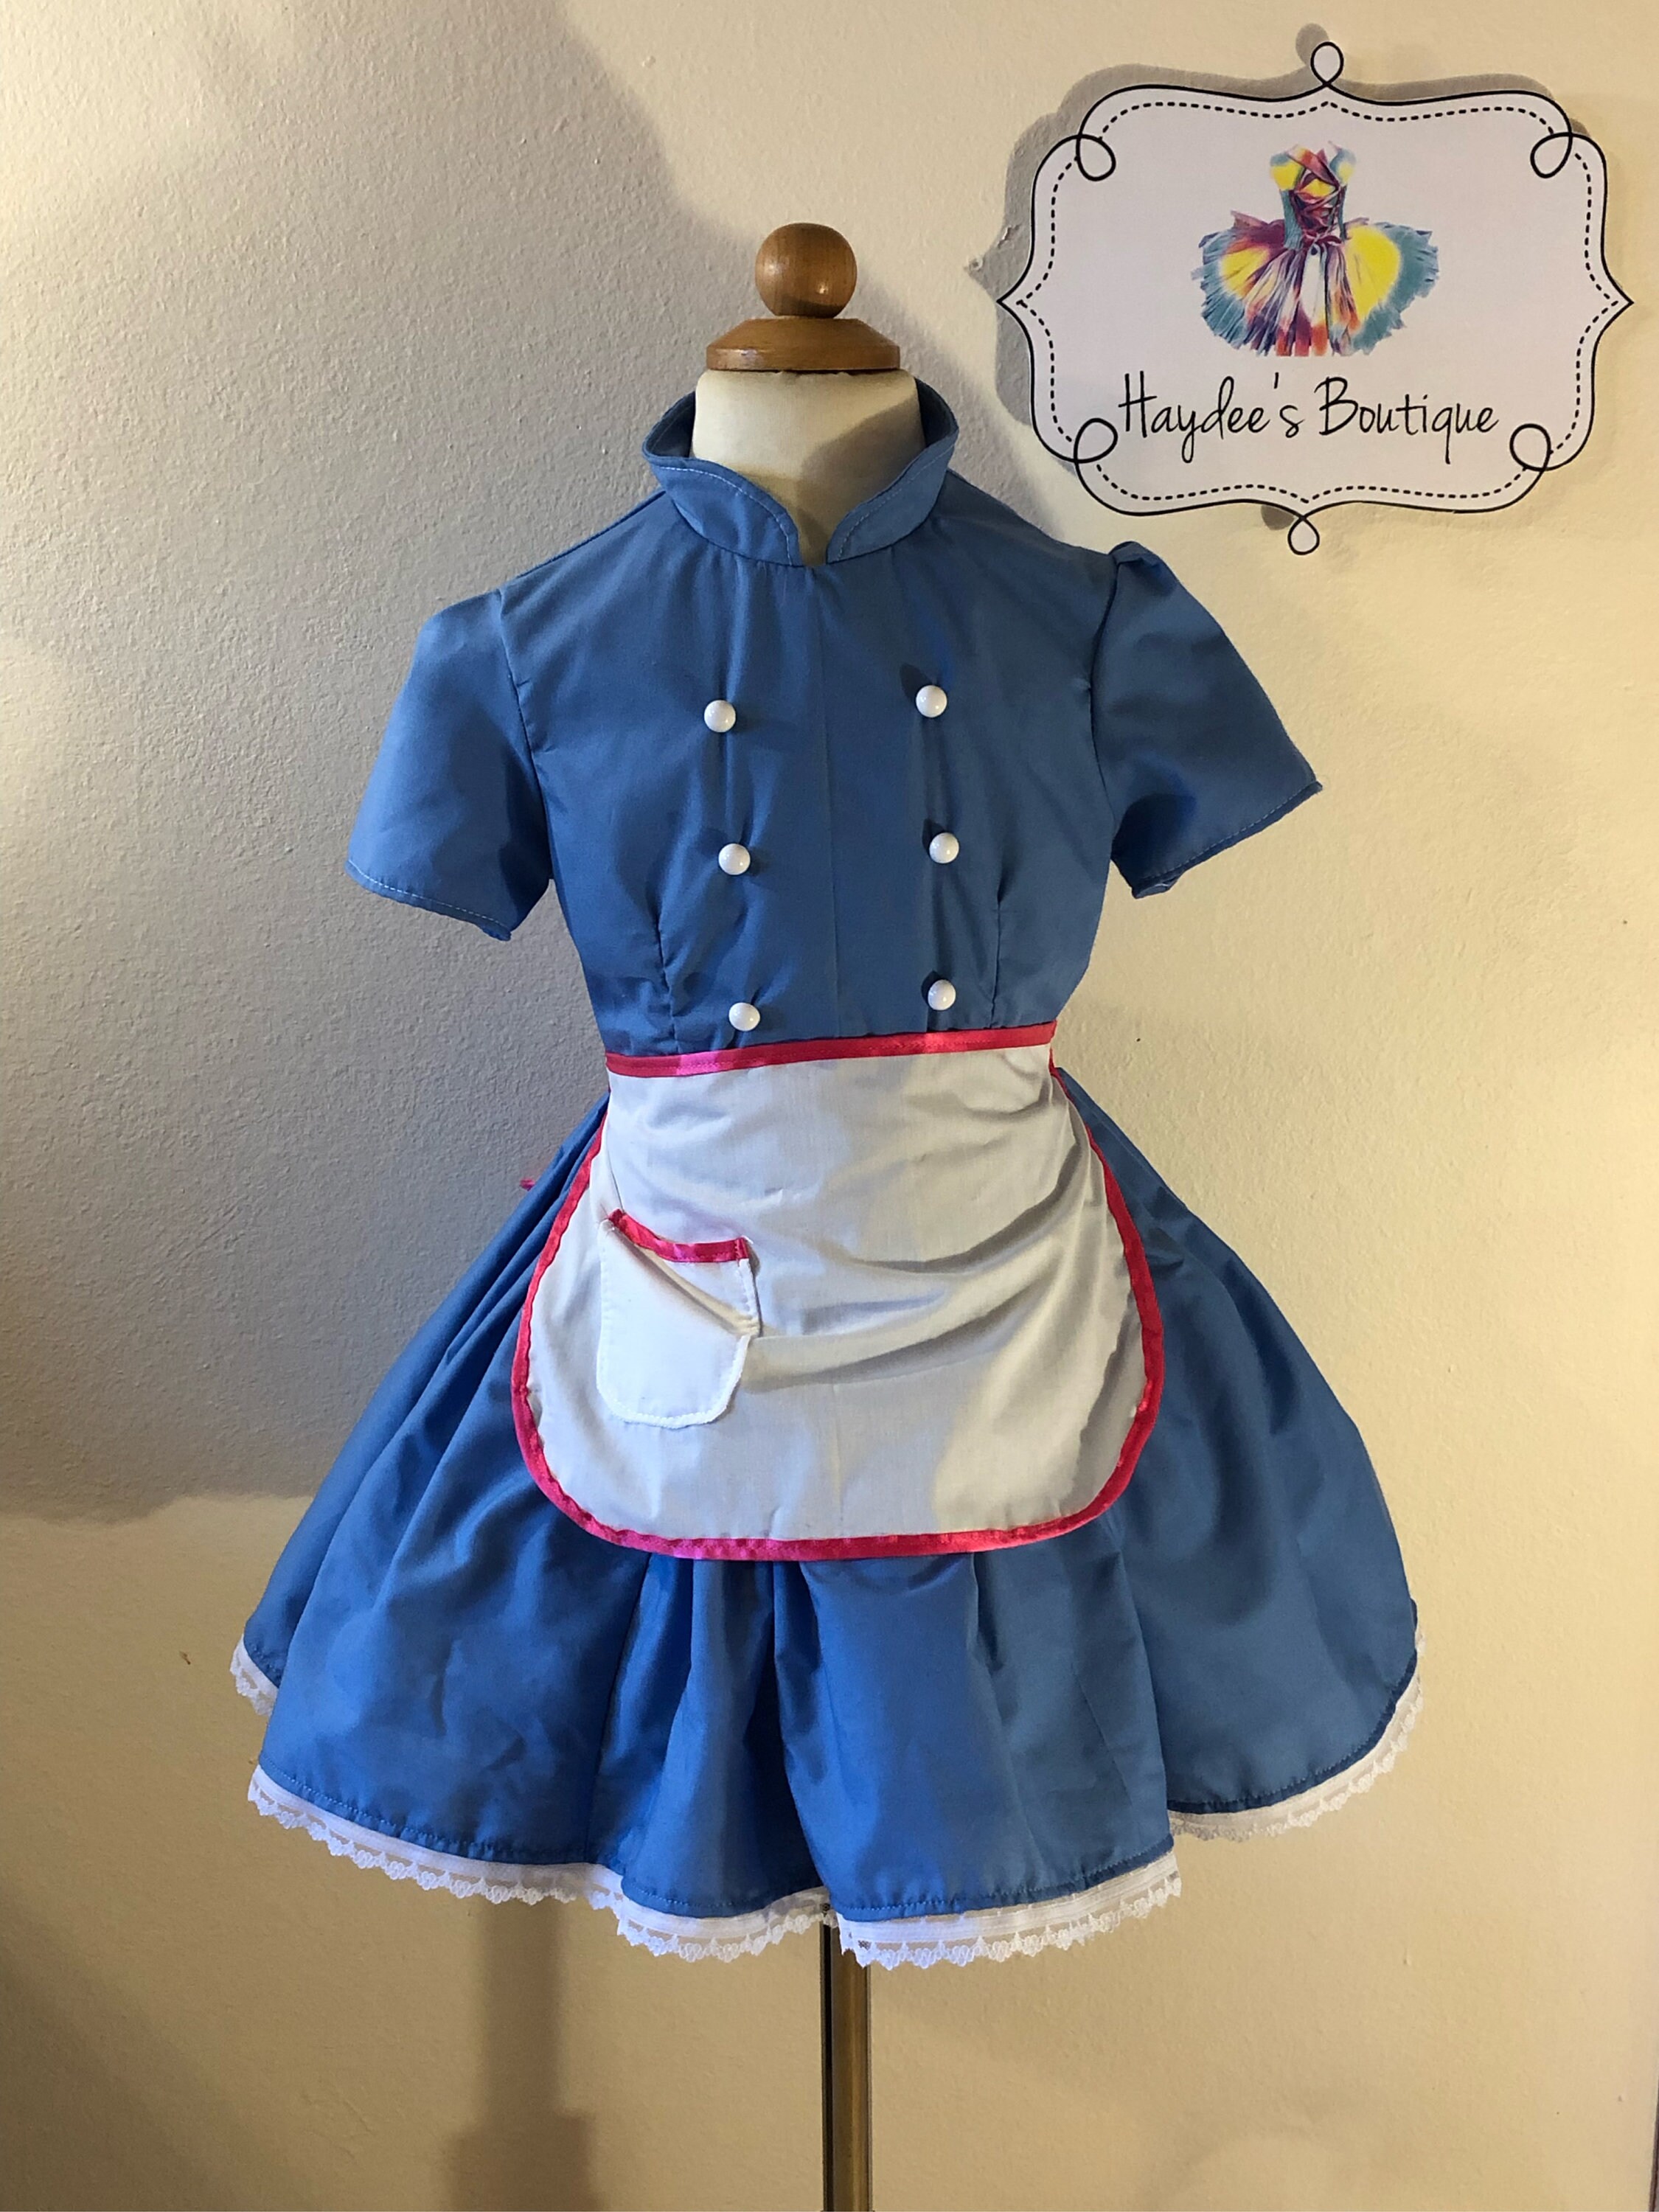 Toddler Alice Costume - Alice's Wonderland Bakery